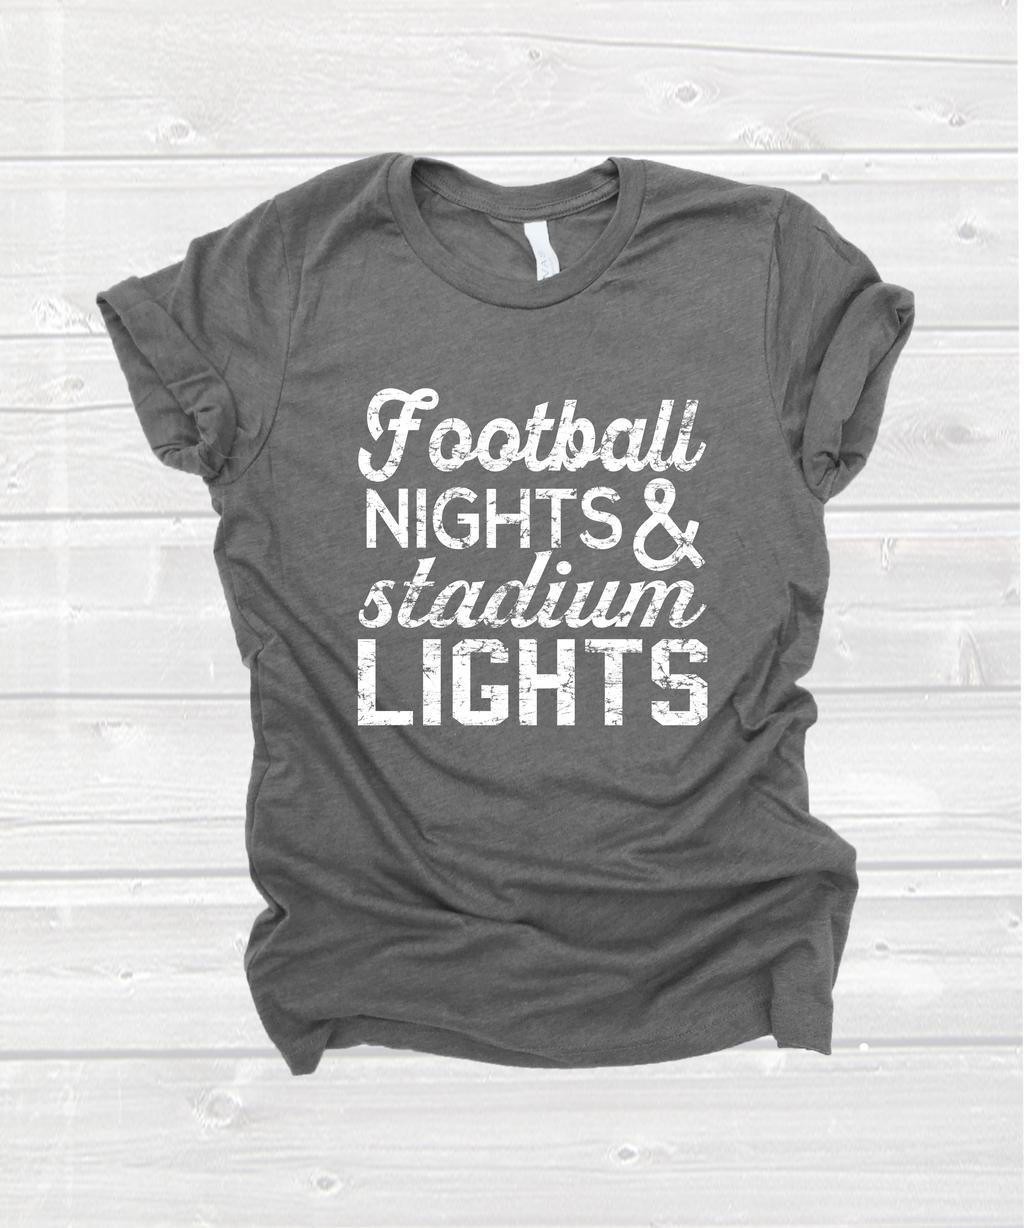 "football nights and stadium lights" tee in heather grey